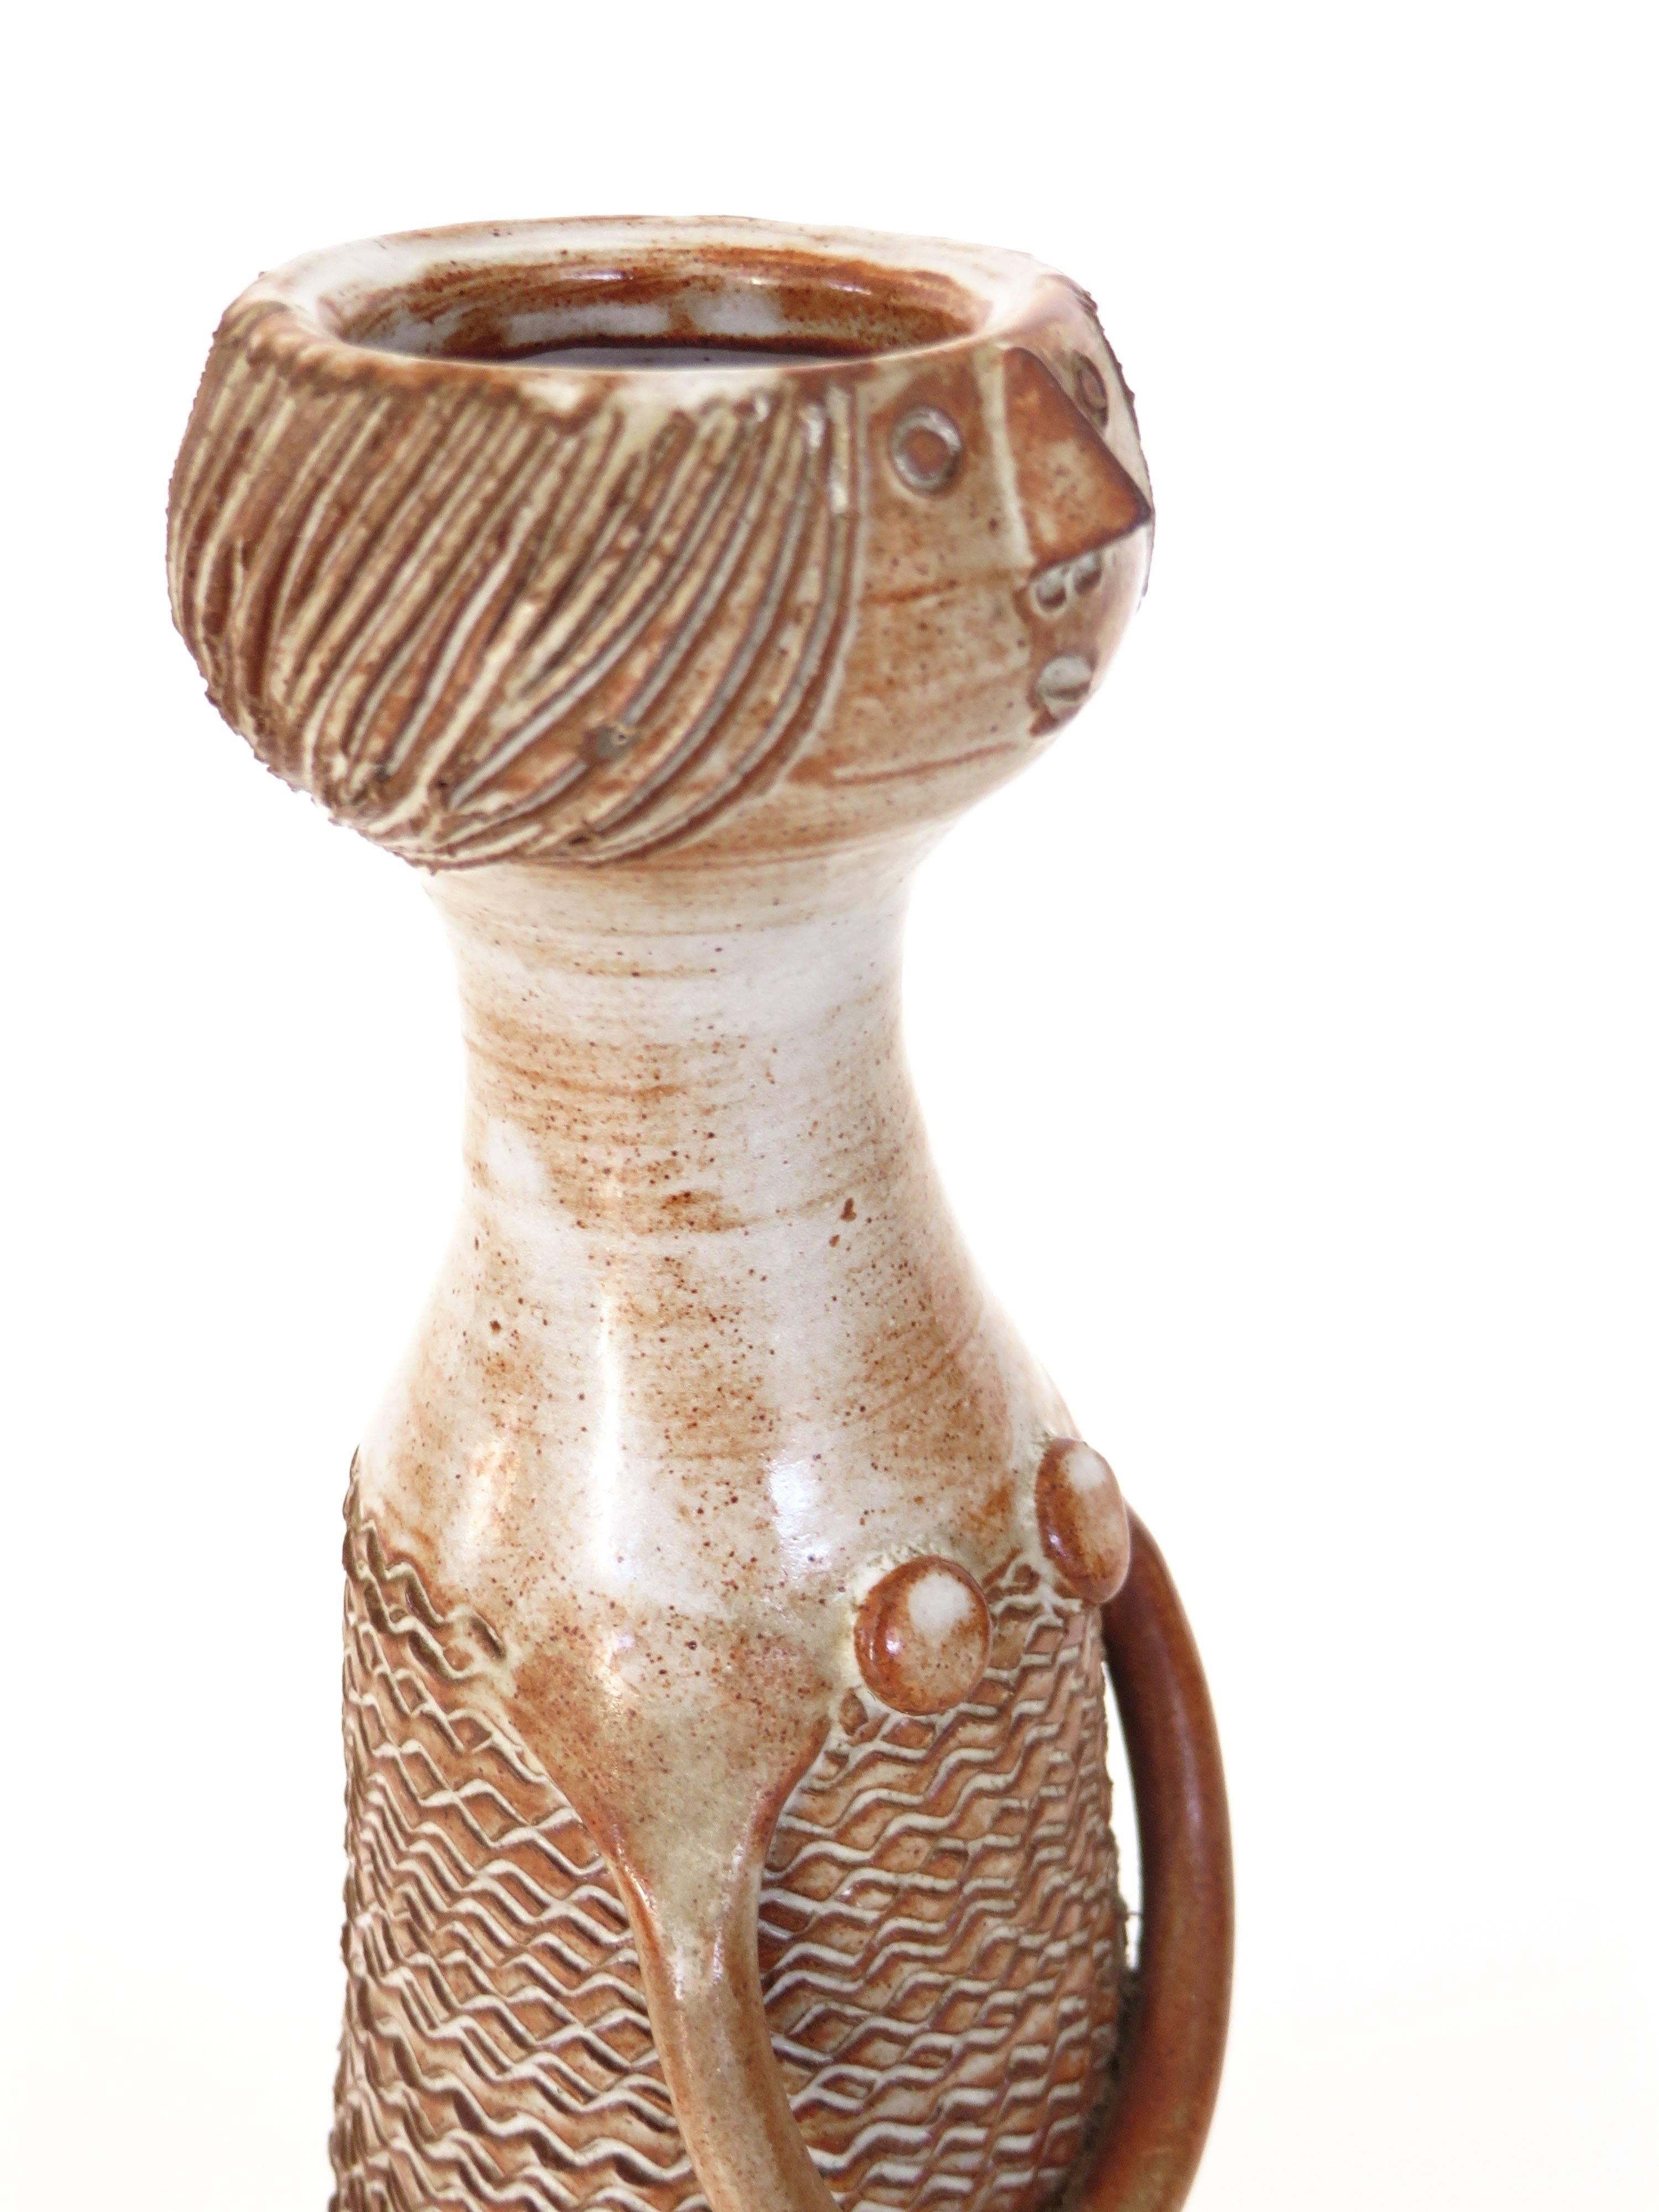 Ceramic Vase by French Ceramicist Jacques Pouchain Signed JP, Atelier Dieulefit 2